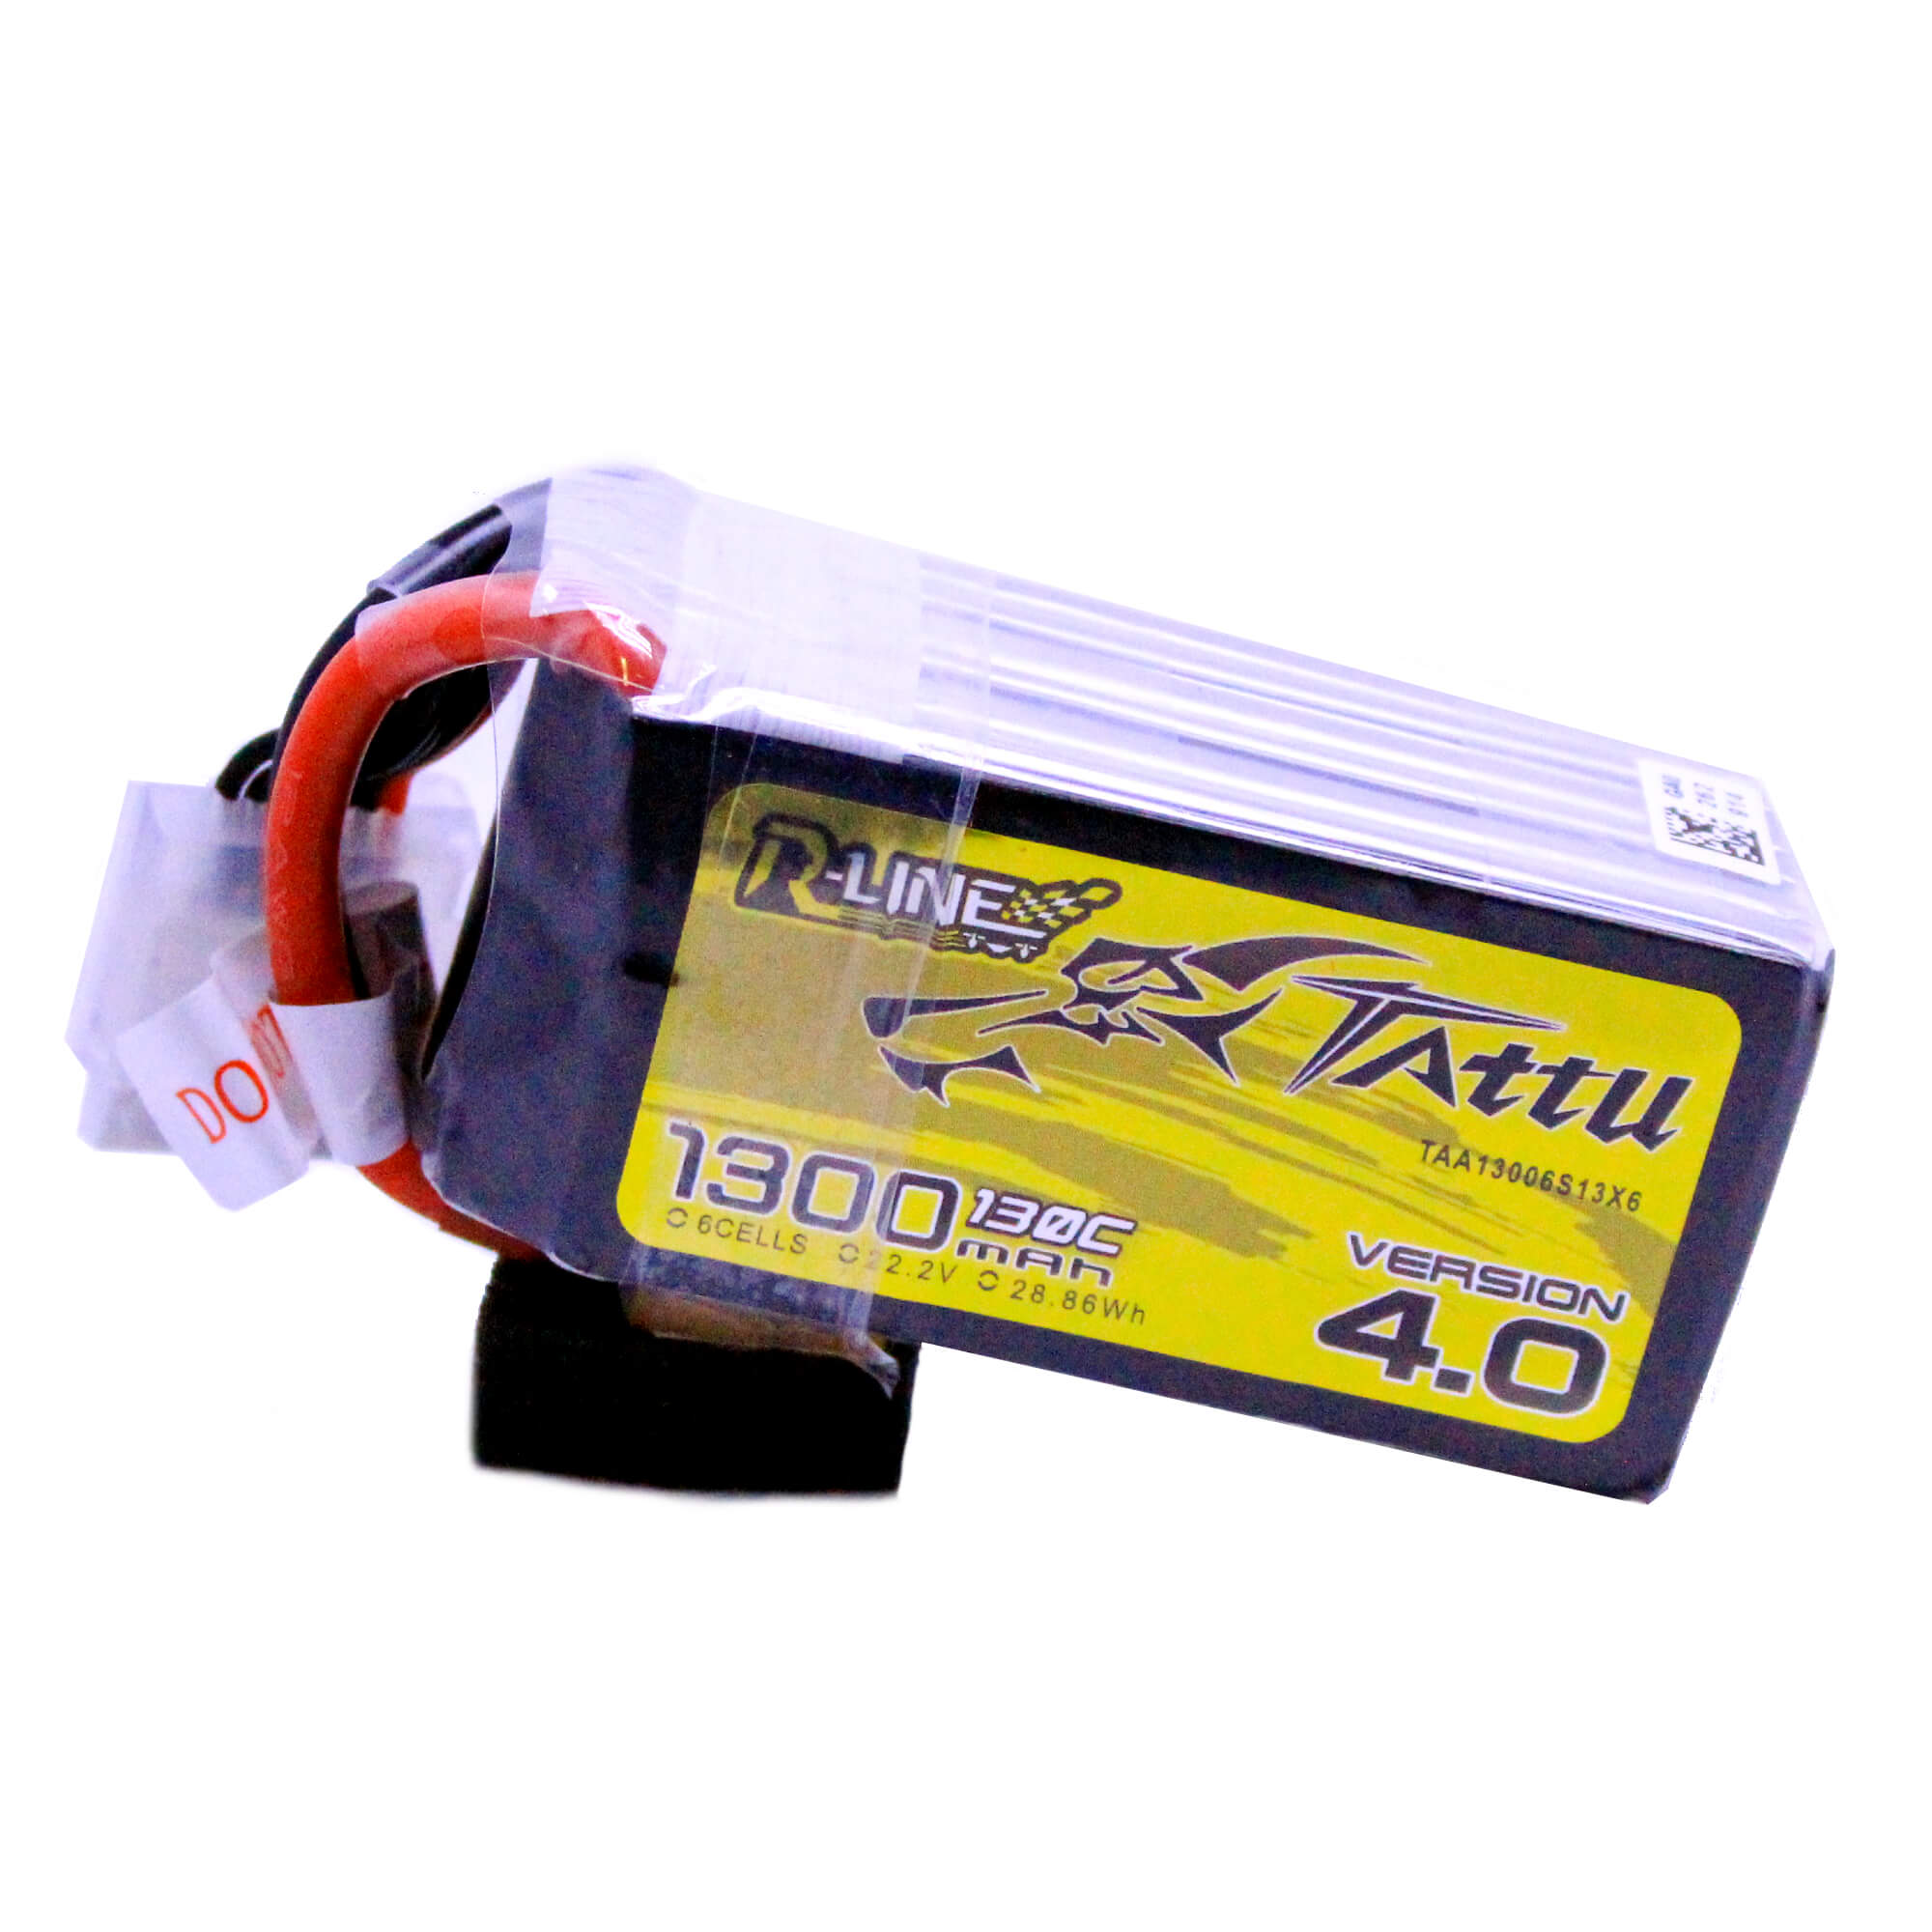 Batterie Lipo Tattu R-Line 4S 1300mAh 130C - Version 4.0 - Drone